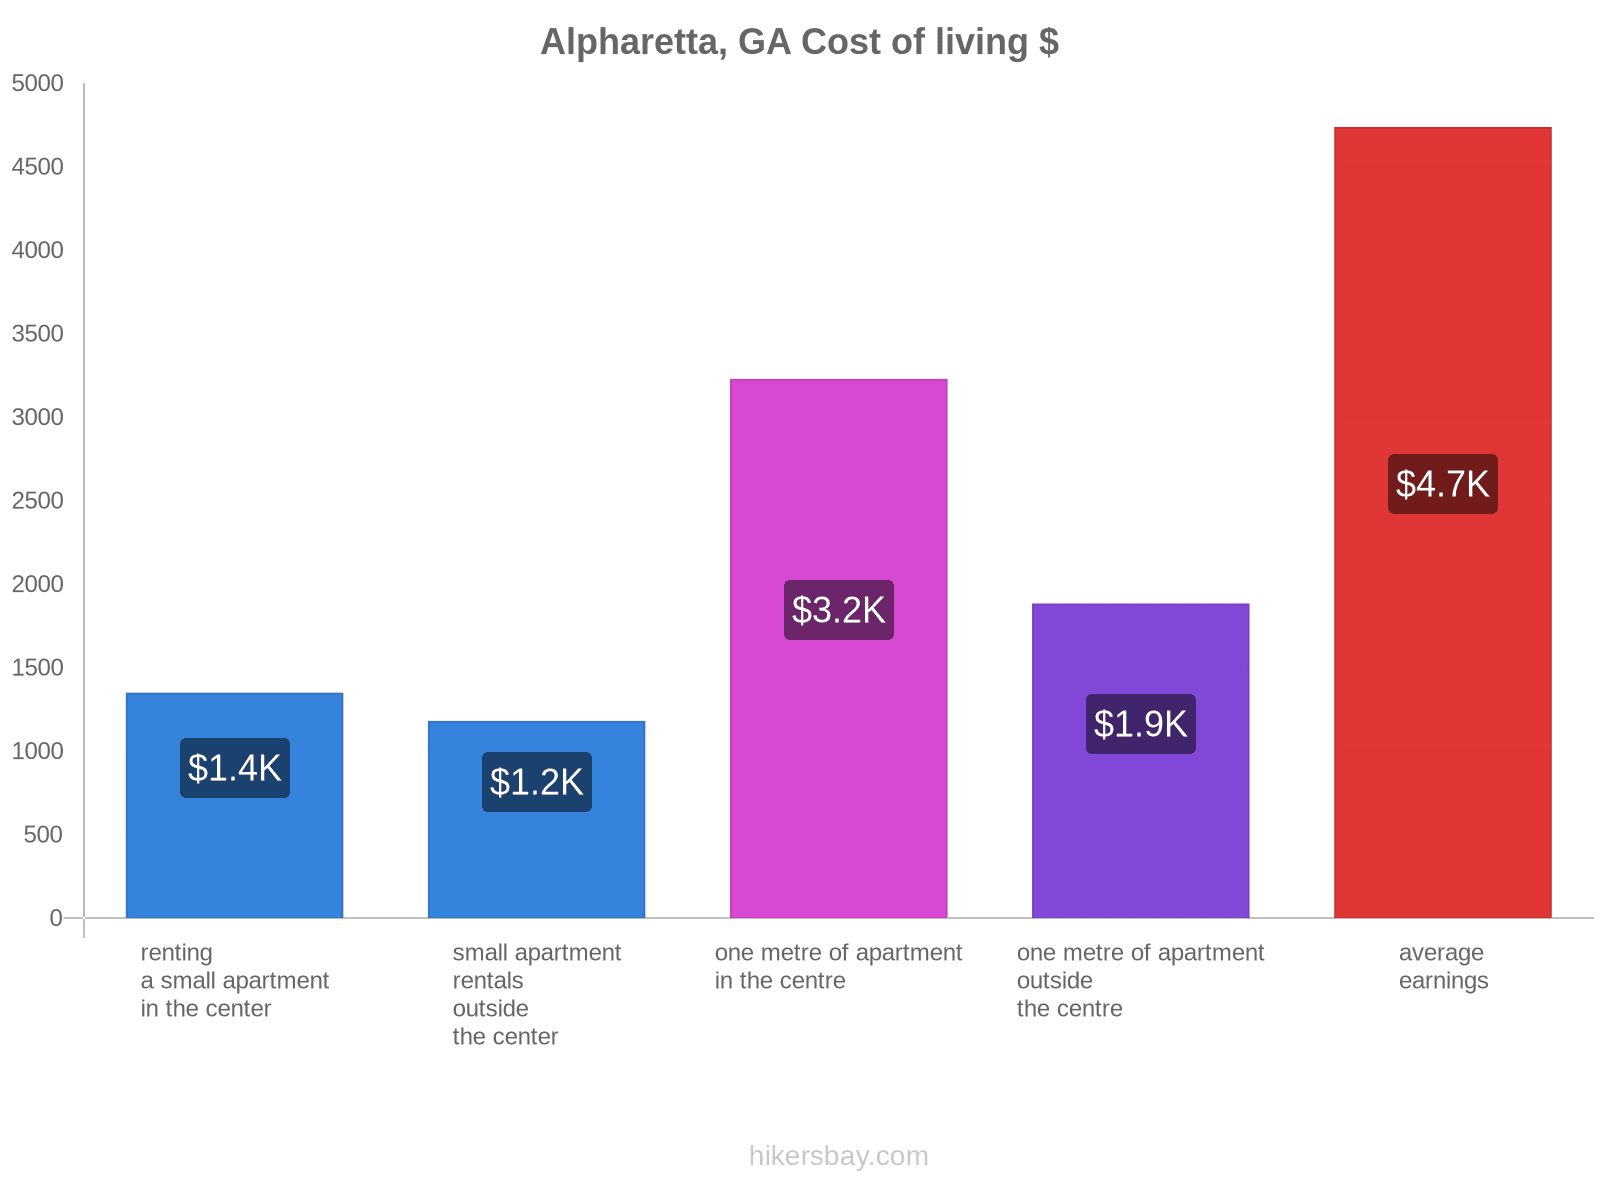 Alpharetta, GA cost of living hikersbay.com